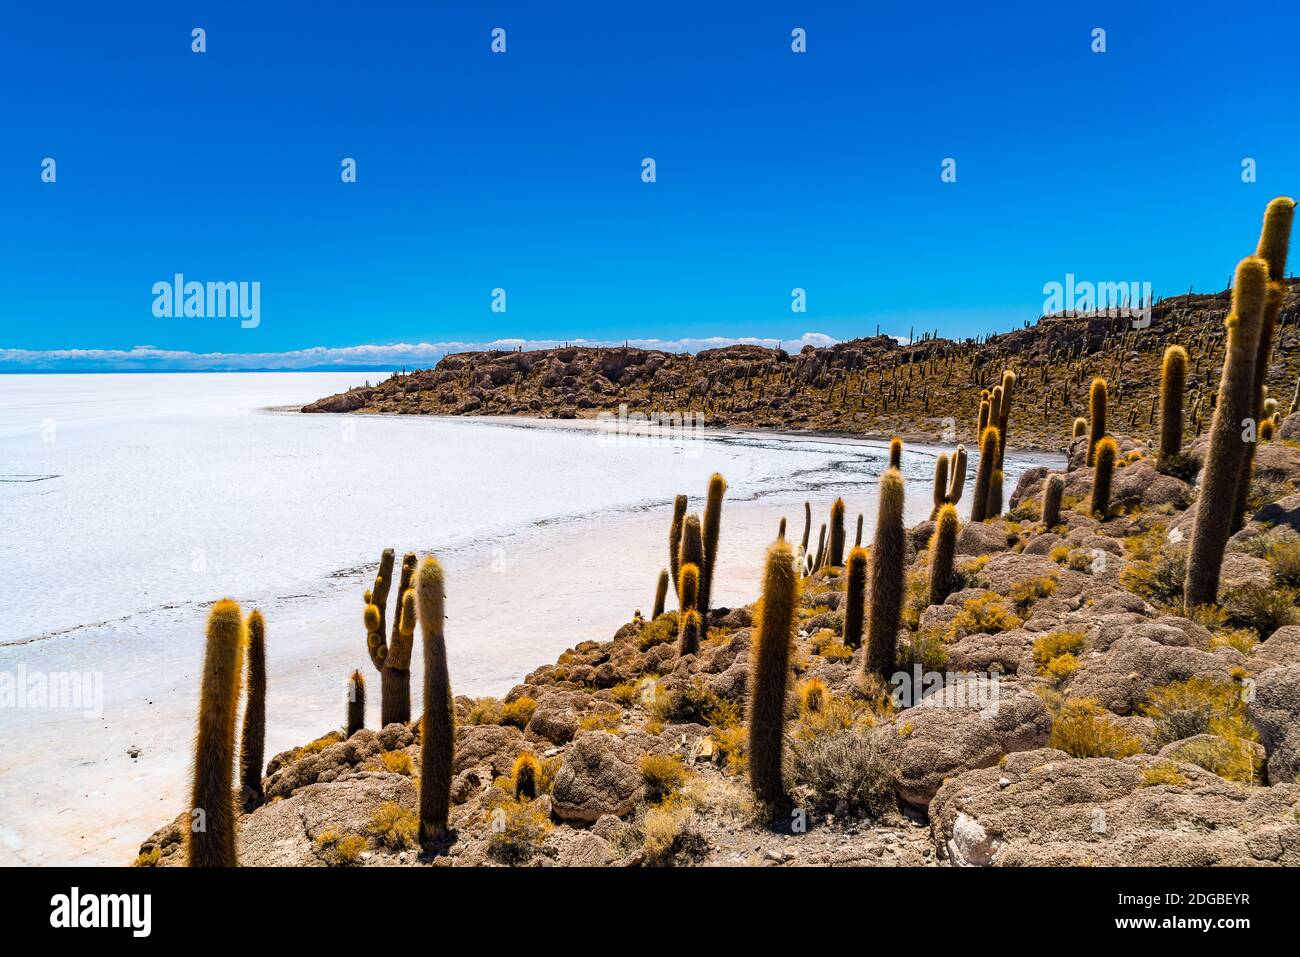 View of the Island of gigantic cactus Incahuasi in the middle of Uyuni Salt Flat Stock Photo